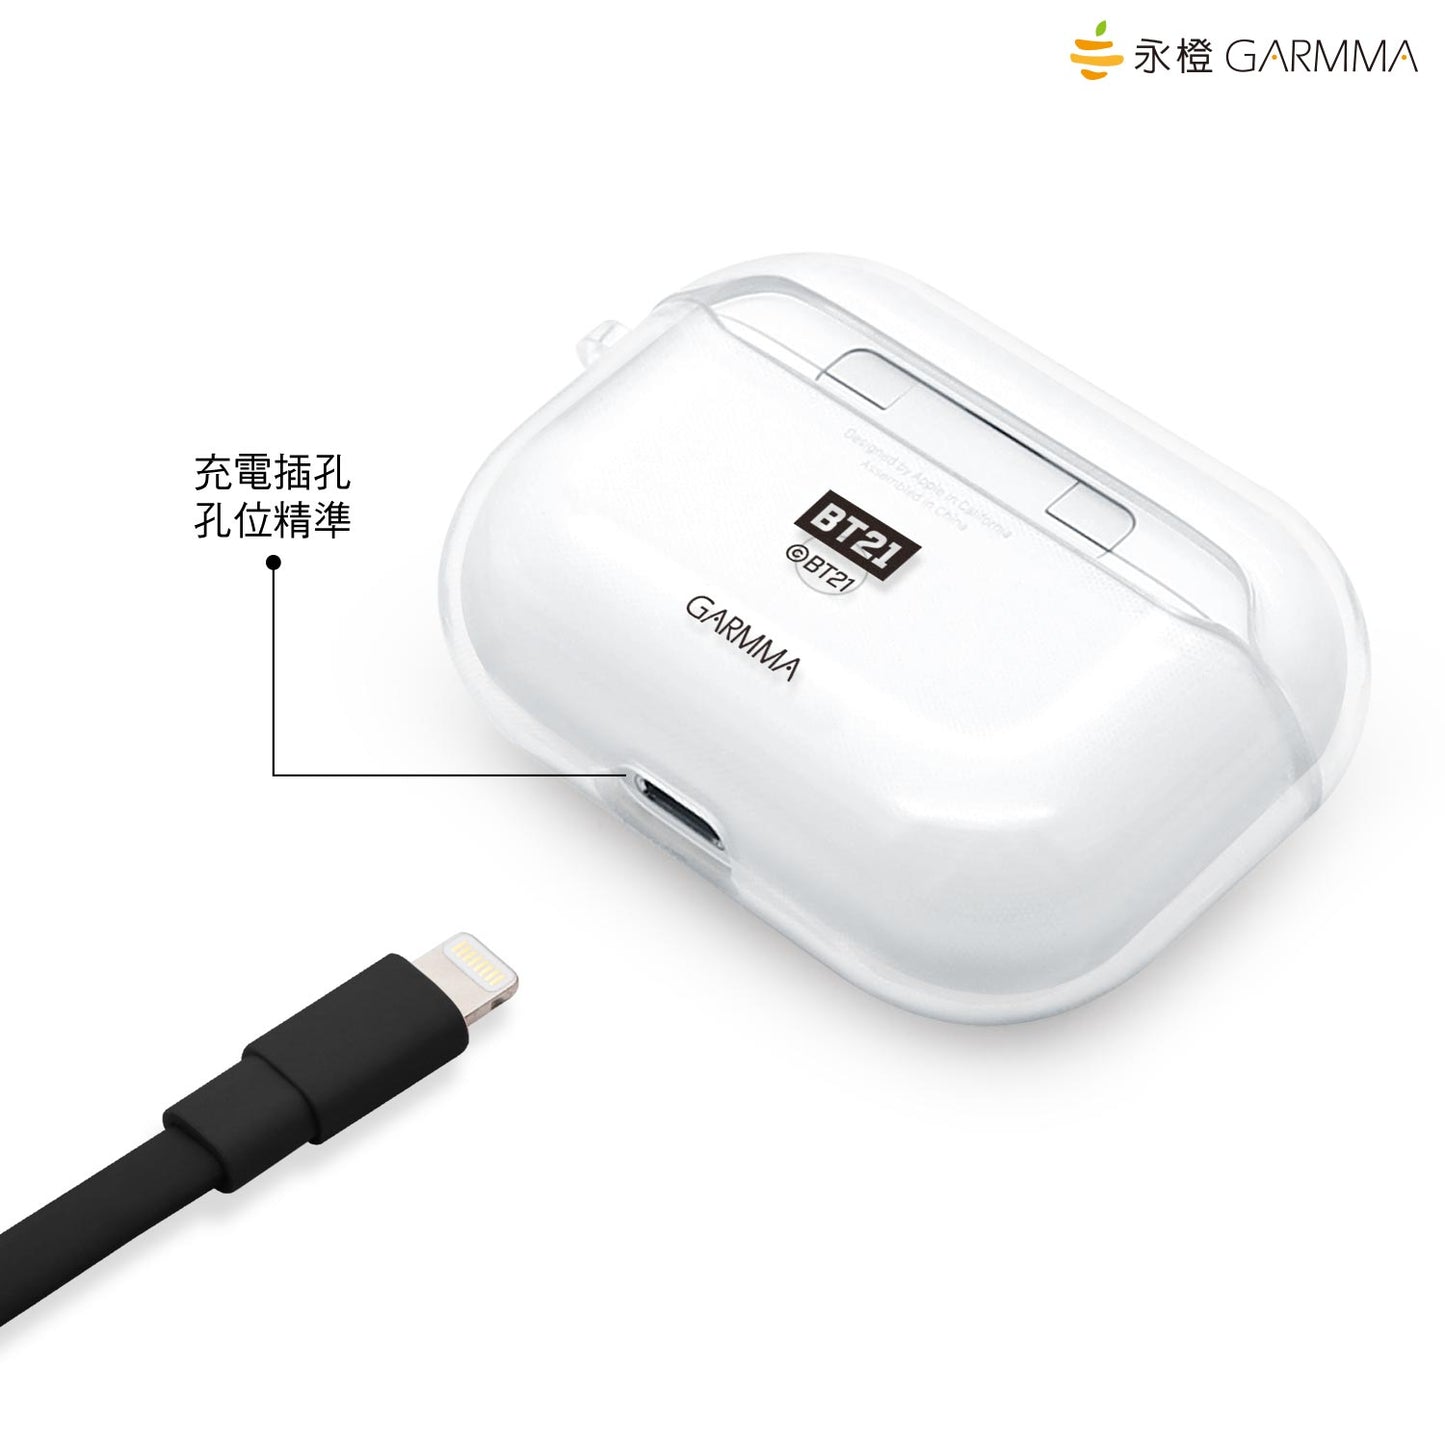 GARMMA BT21 UNIVERSTAR Soft TPU Apple AirPods Pro Charging Case Cover